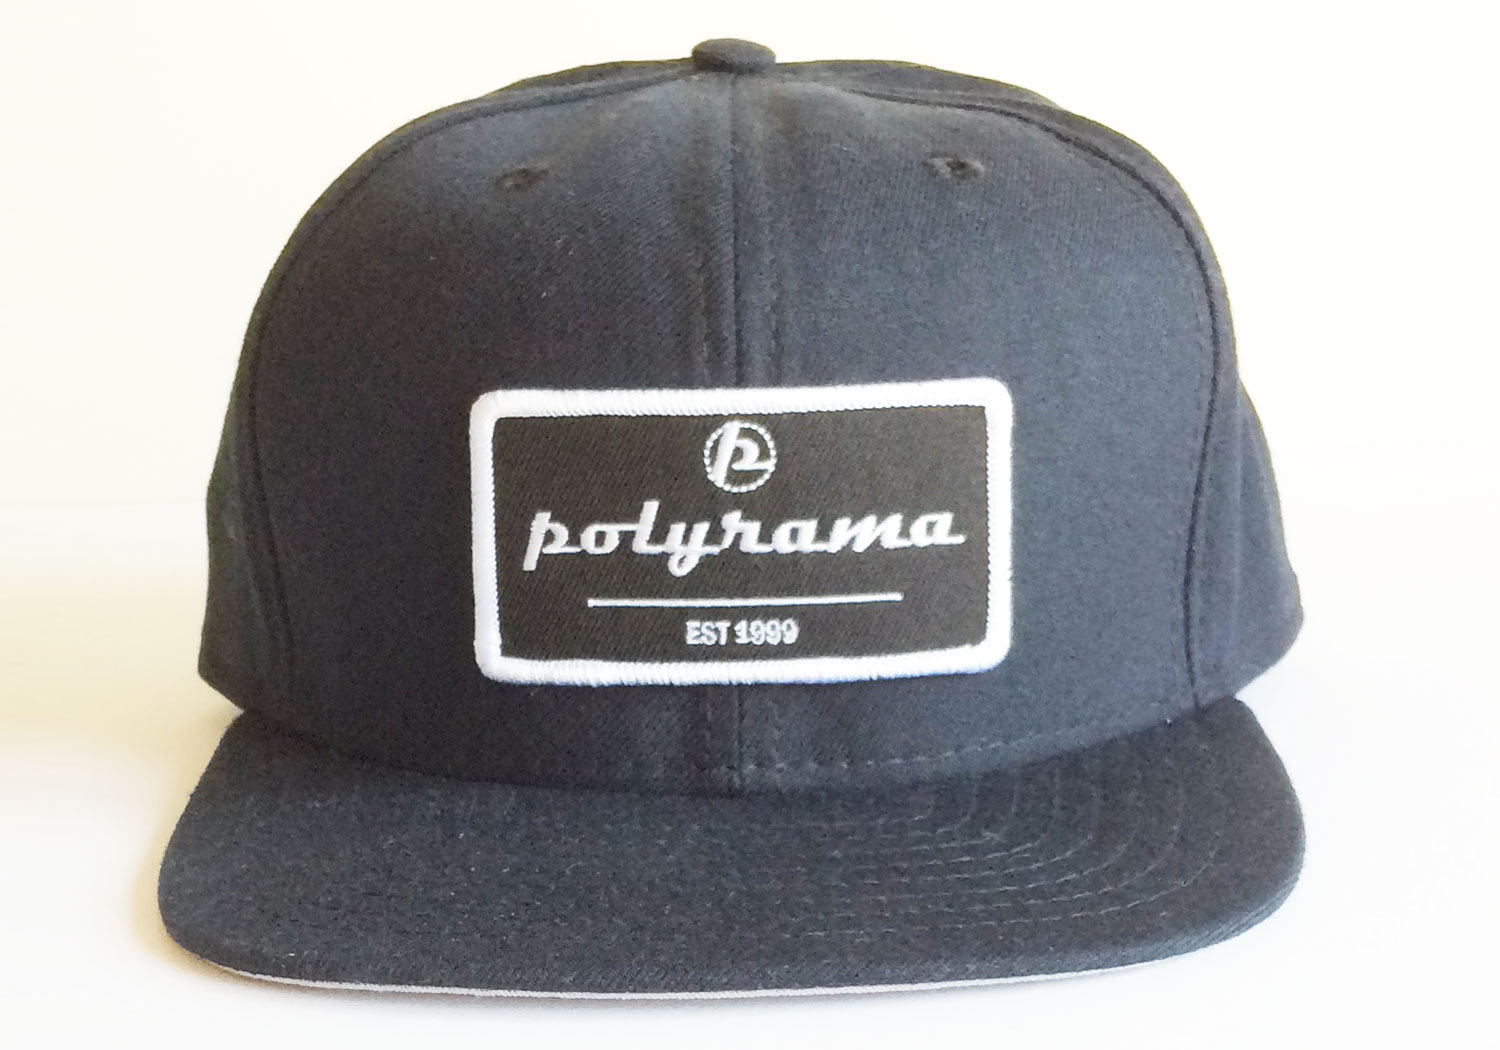 Polyrama flat bill hat #1640 front view